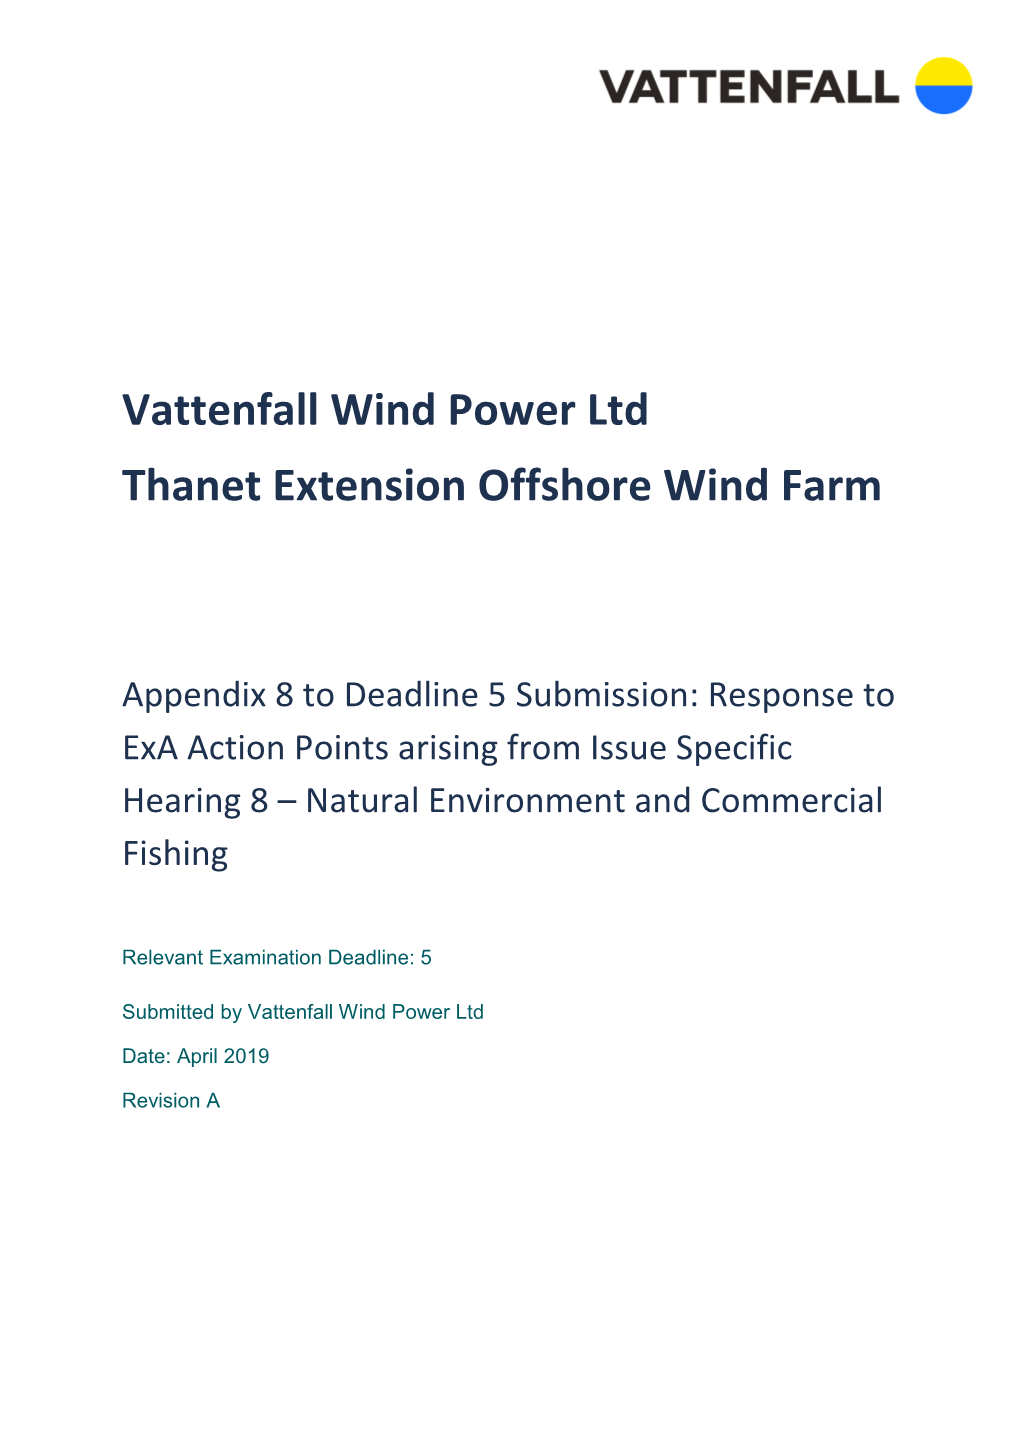 Vattenfall Wind Power Ltd Thanet Extension Offshore Wind Farm